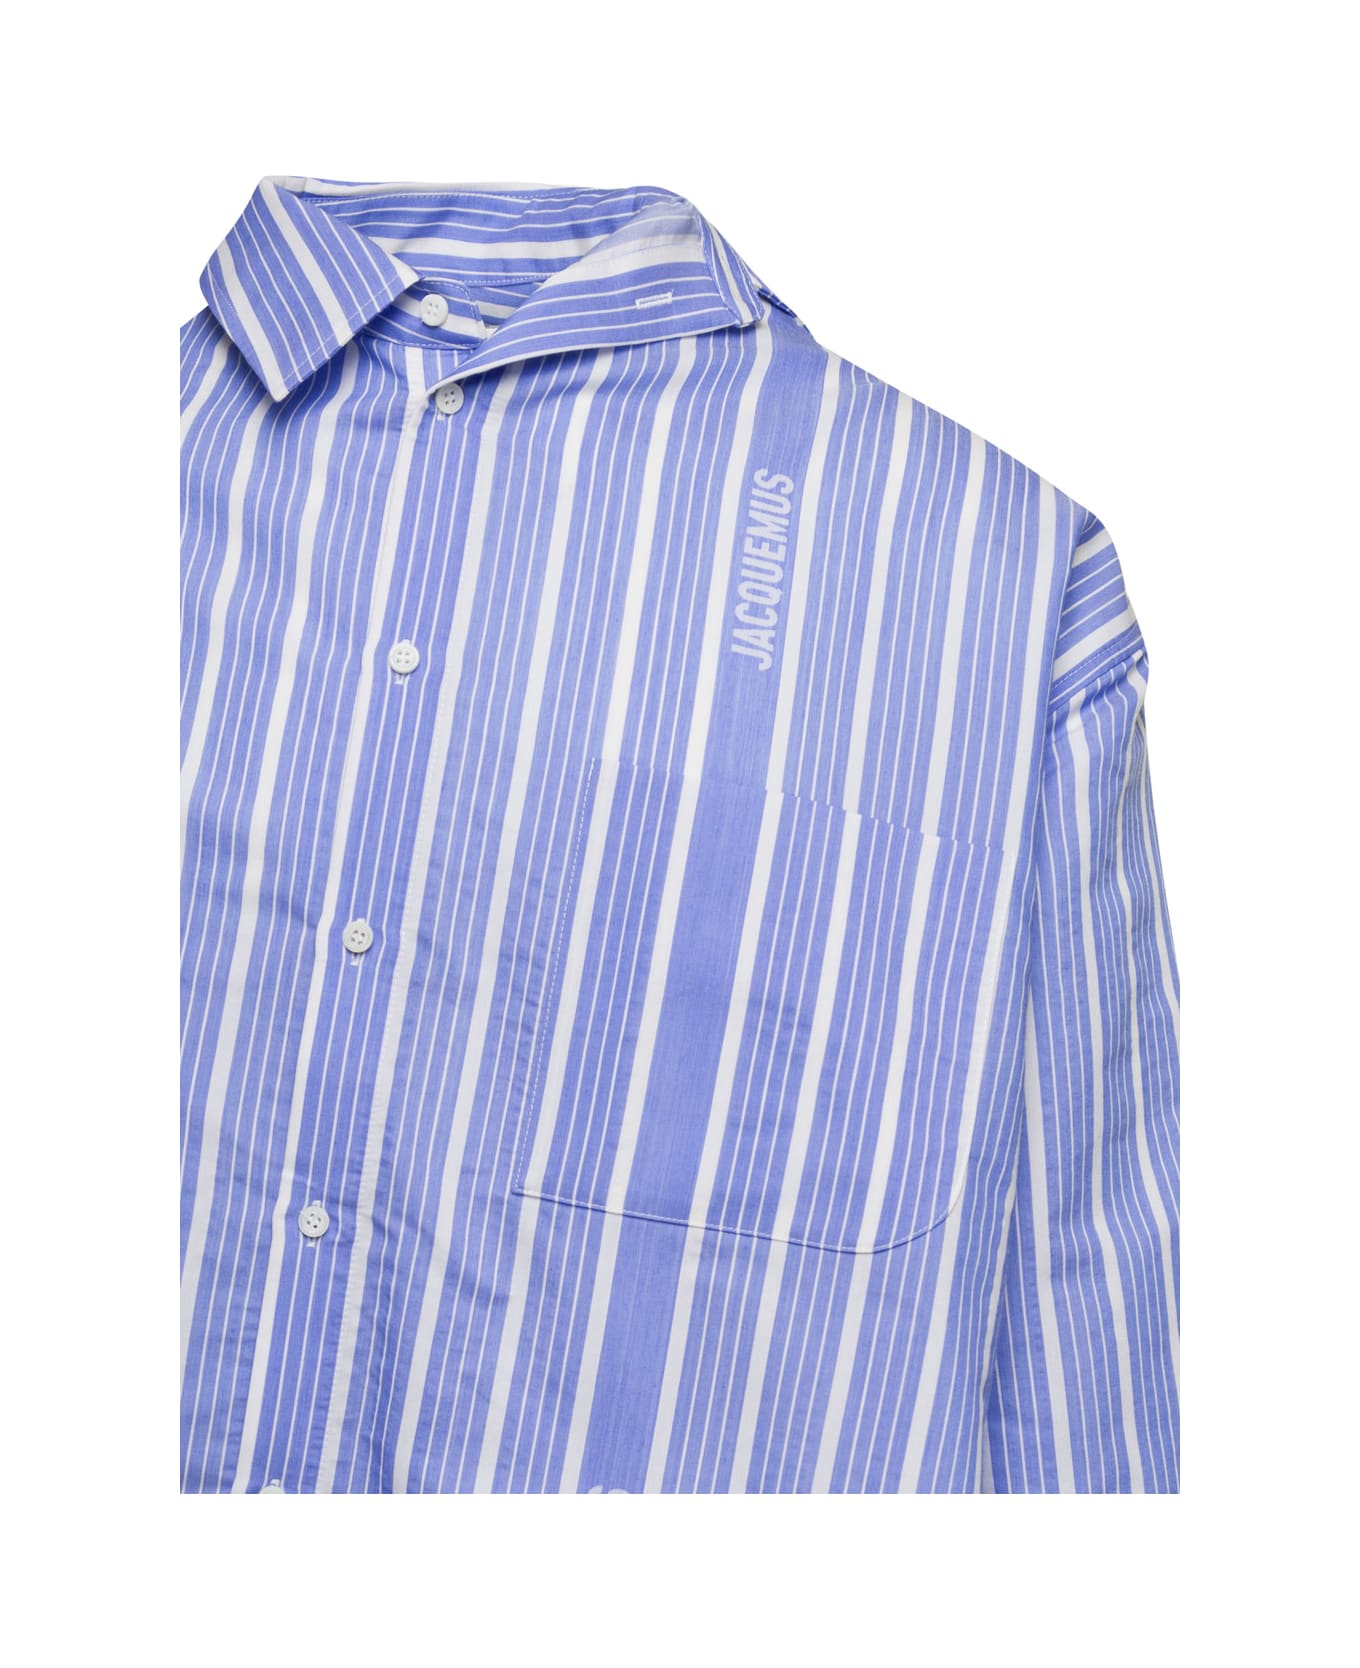 Jacquemus Cuadro Striped Silk-blend Shirt - Jcqud bus. lg stp blue/wh シャツ